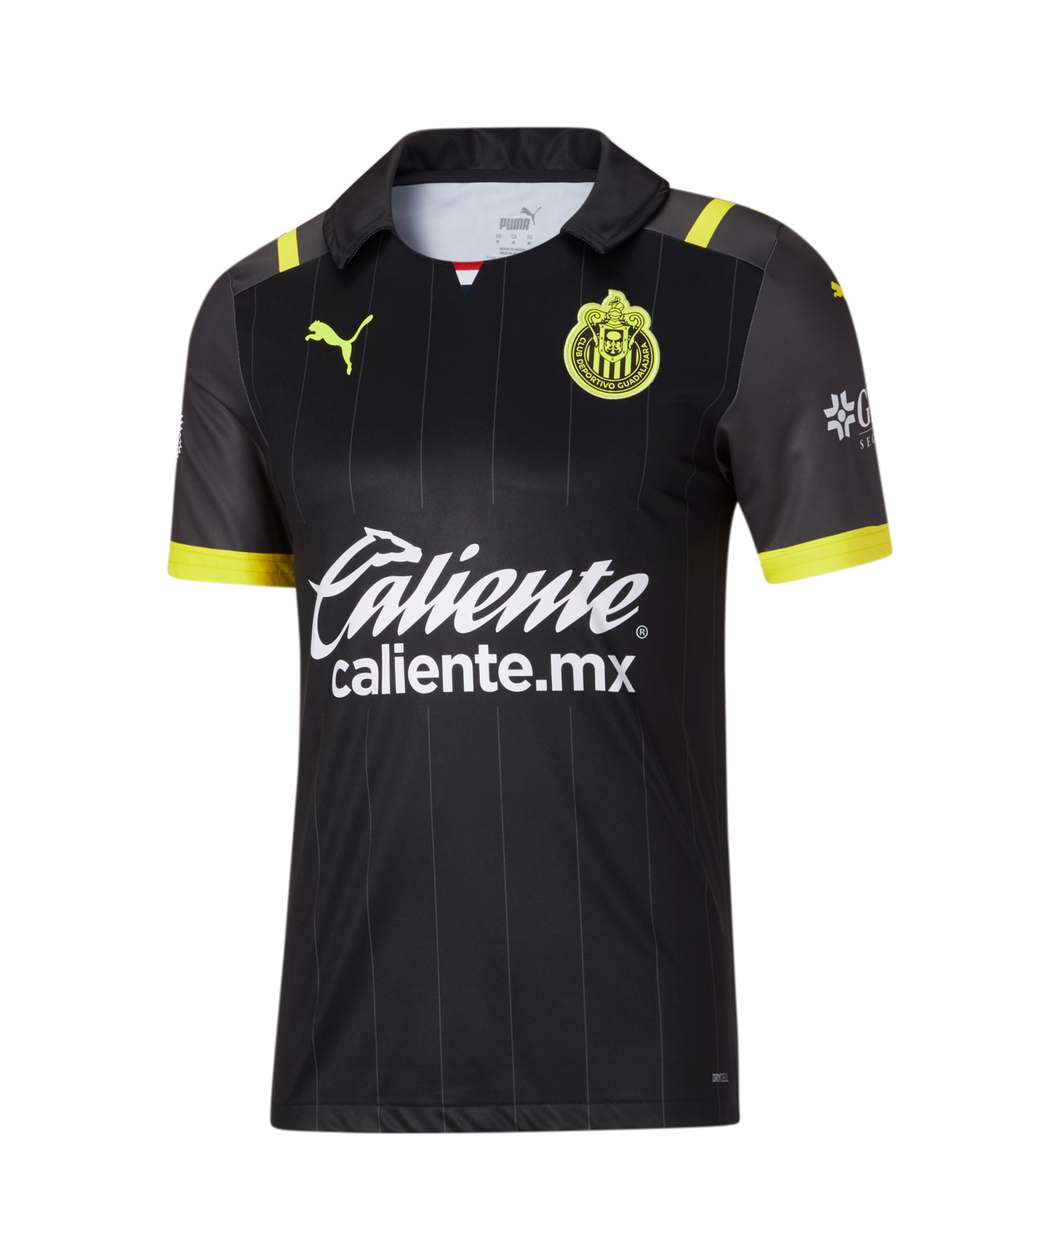 Puma Chivas Away shirt 21-22 Replica 763230 01 black/neon